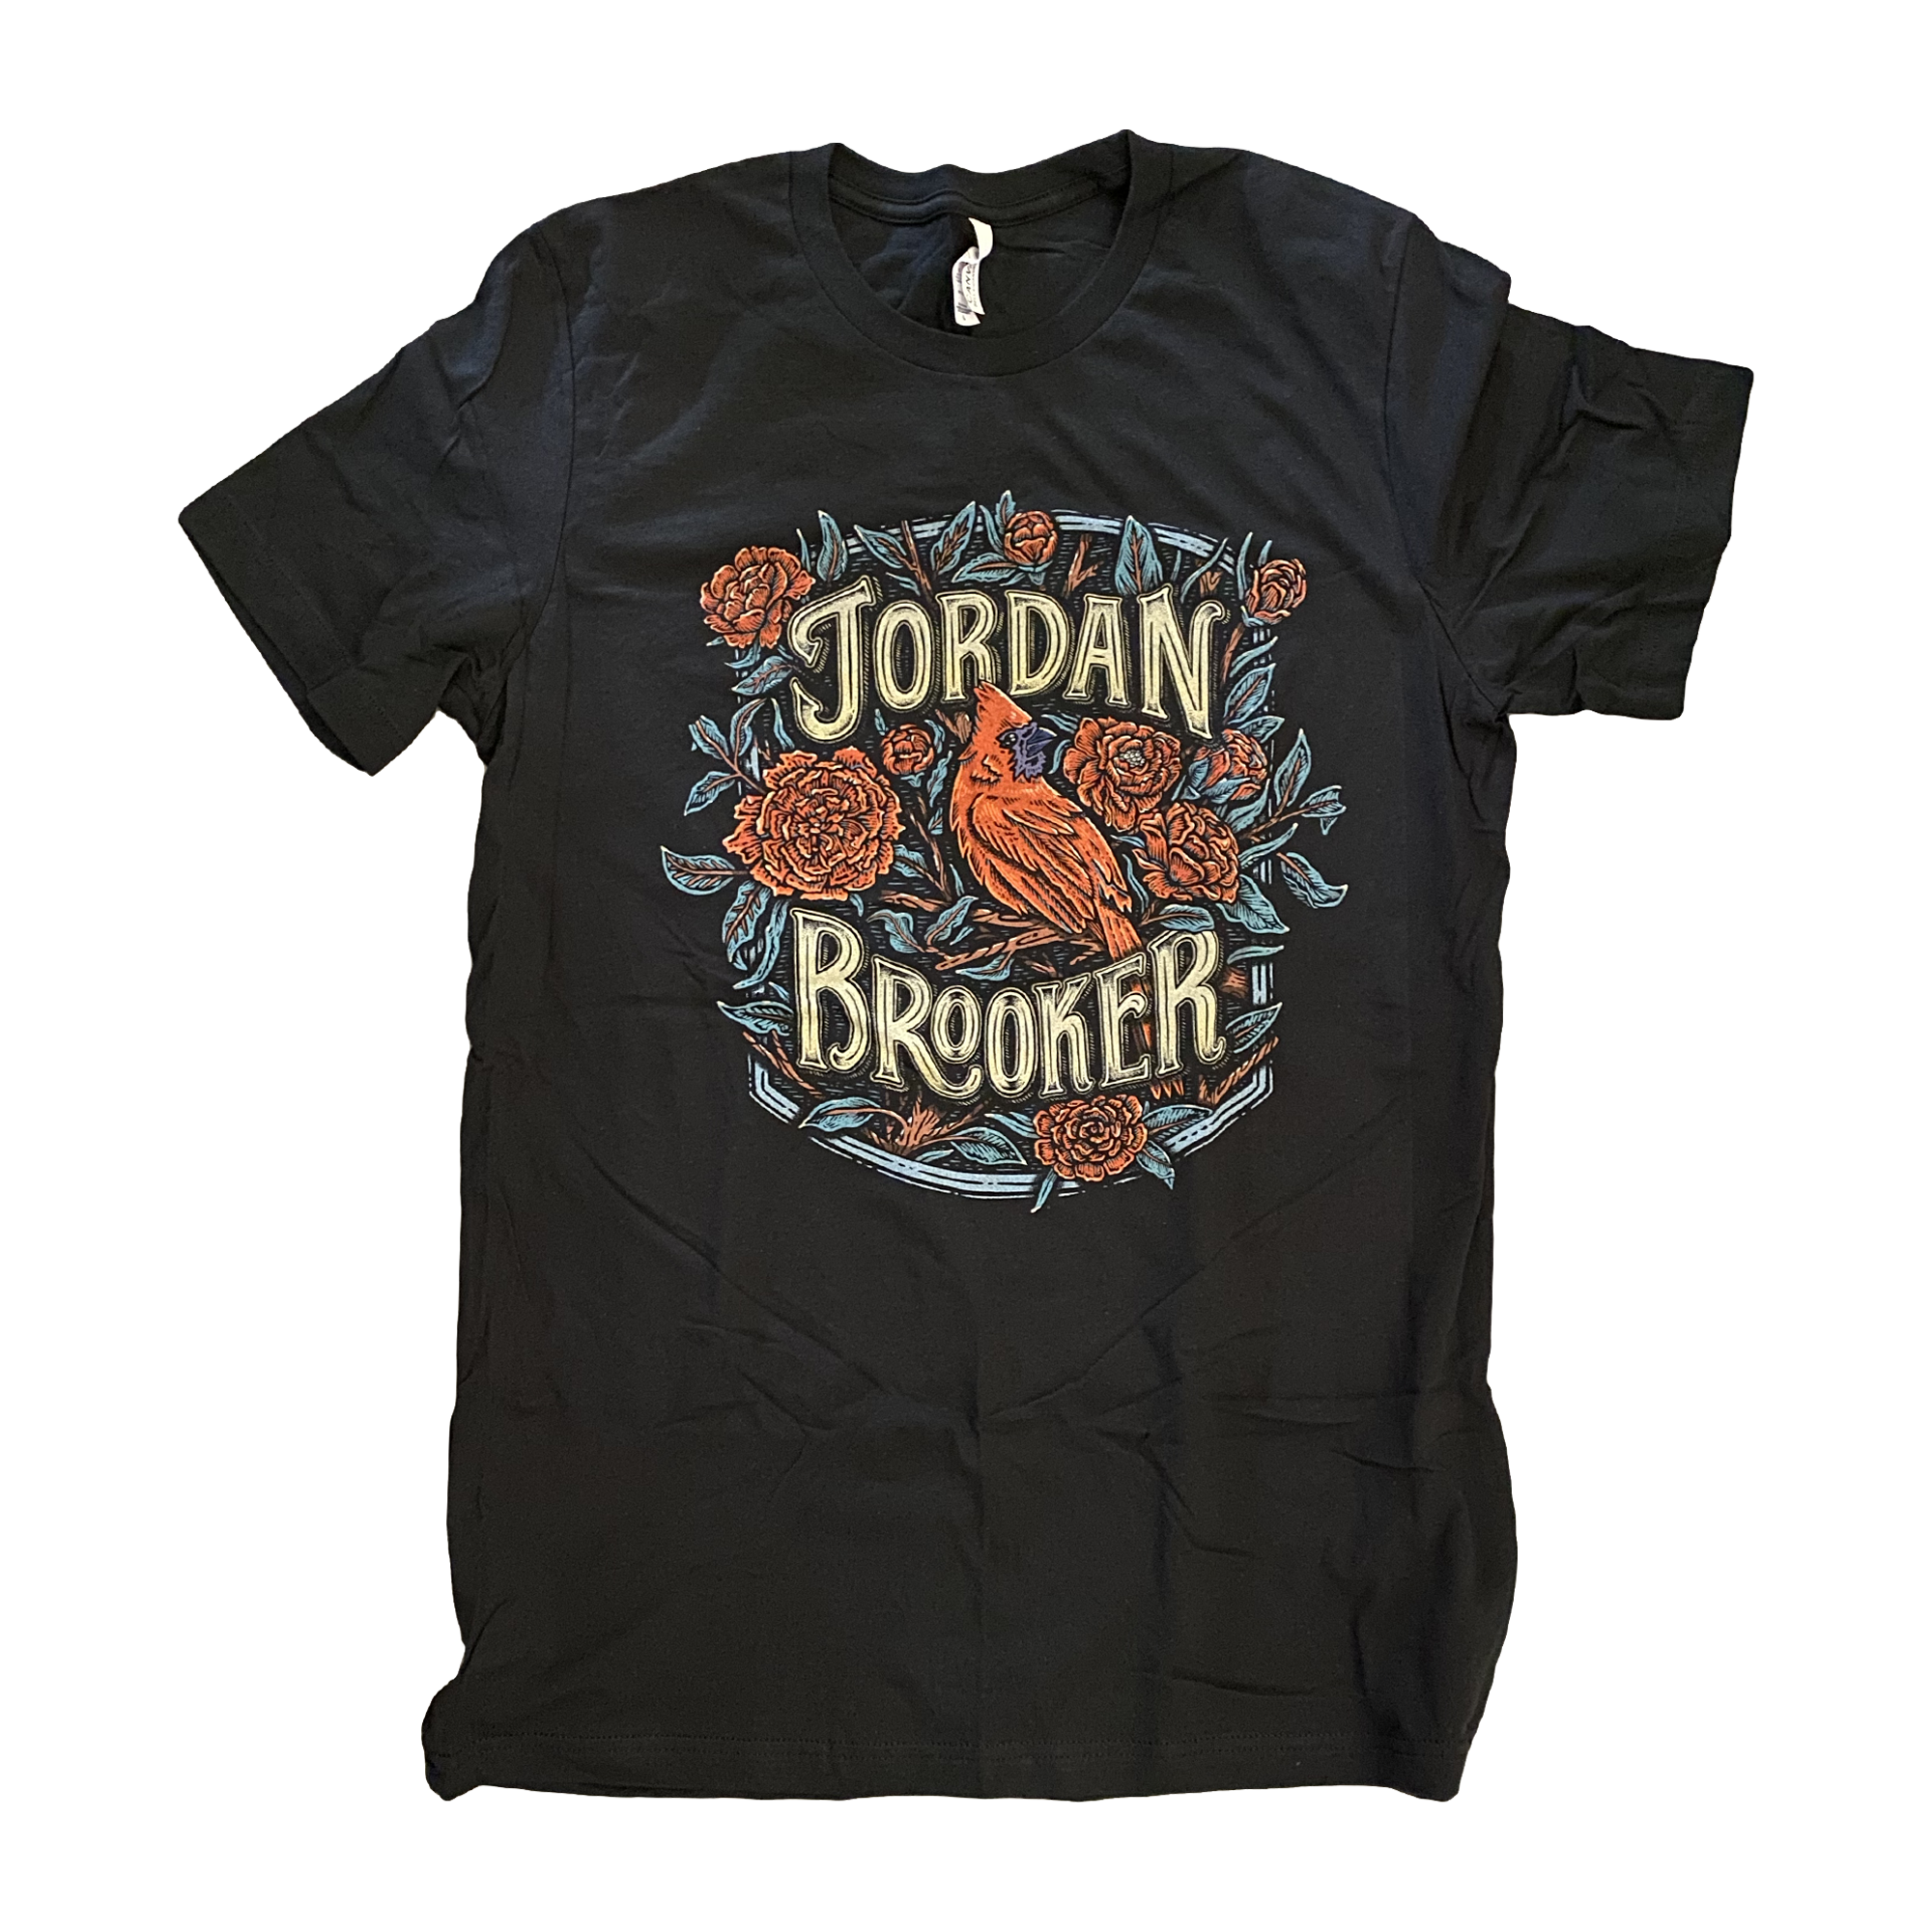 Jordan Brooker - Rose Logo Shirt